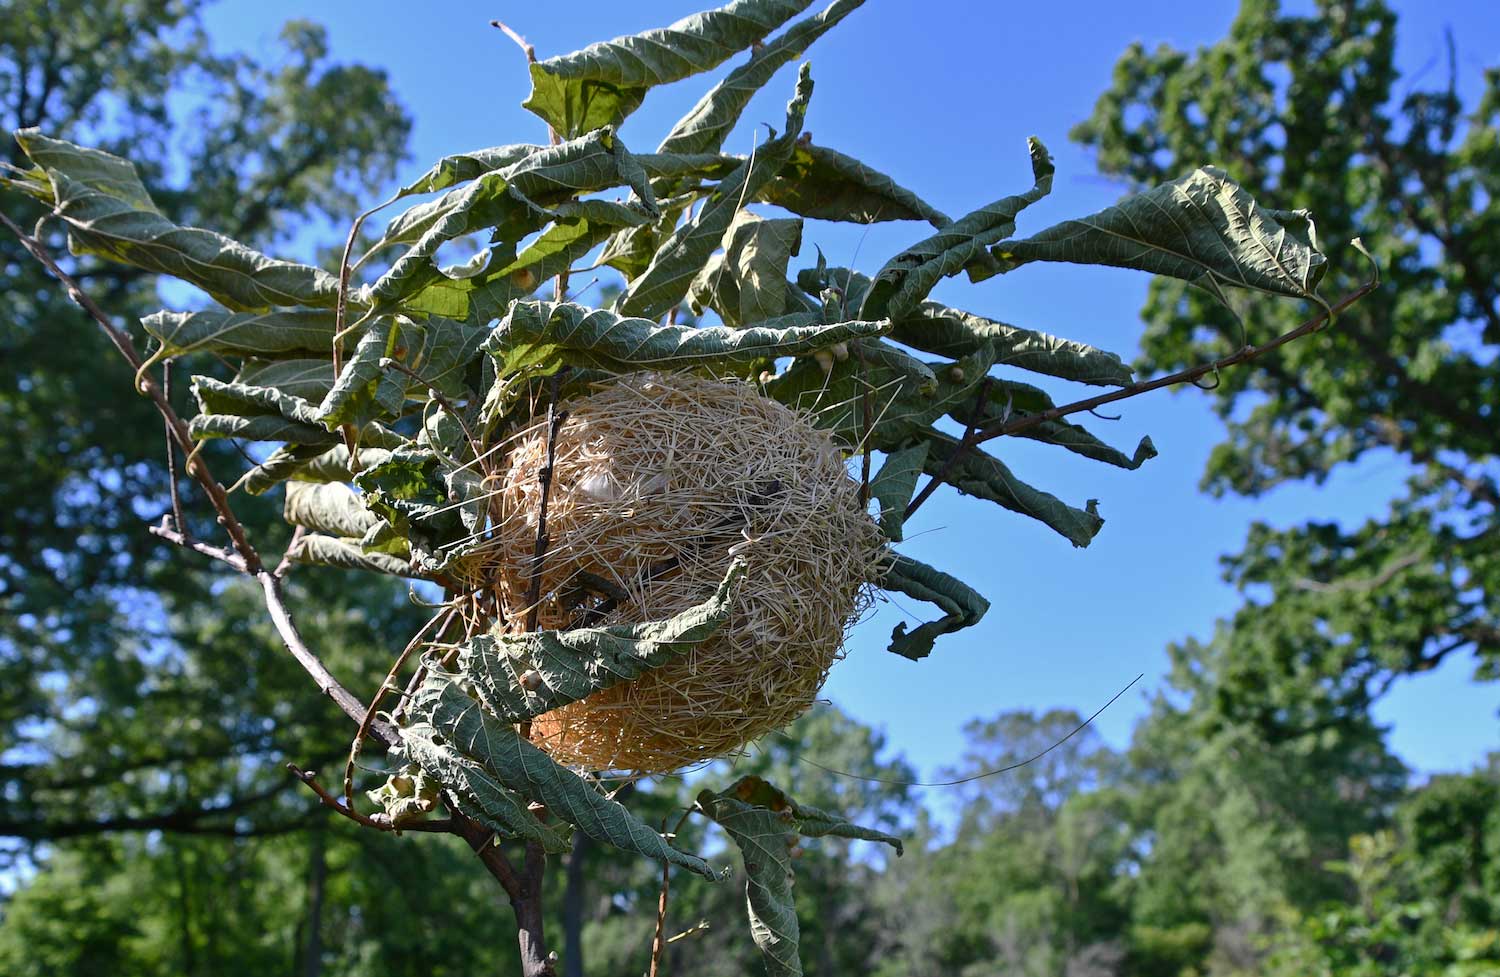 An oriole nest in a tree.